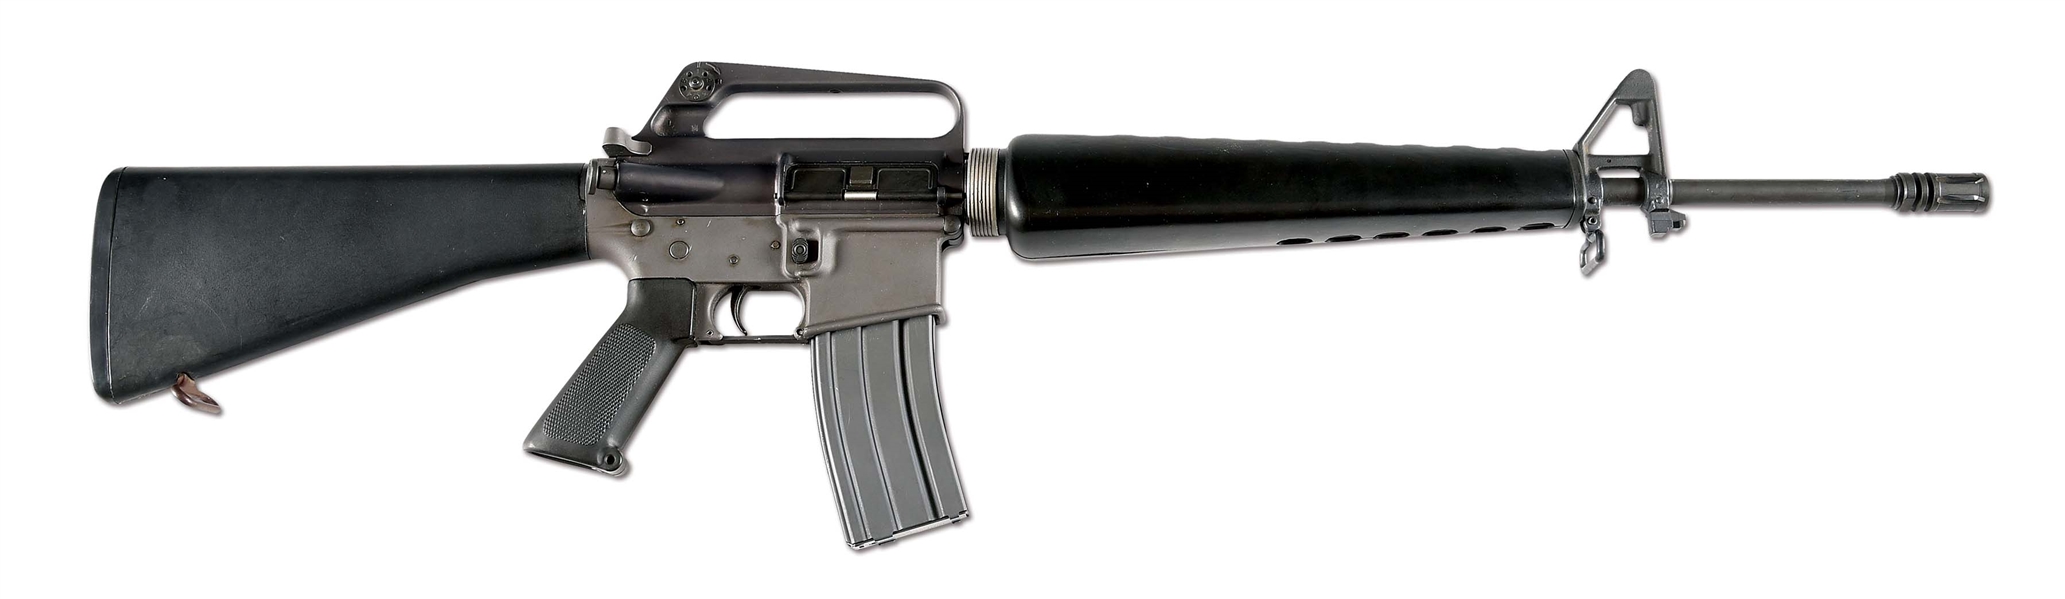 (N) CIENER REGISTERED EA COMPANY J-15 COPY OF COLT M16A1 MACHINE GUN (FULLY TRANSFERABLE).